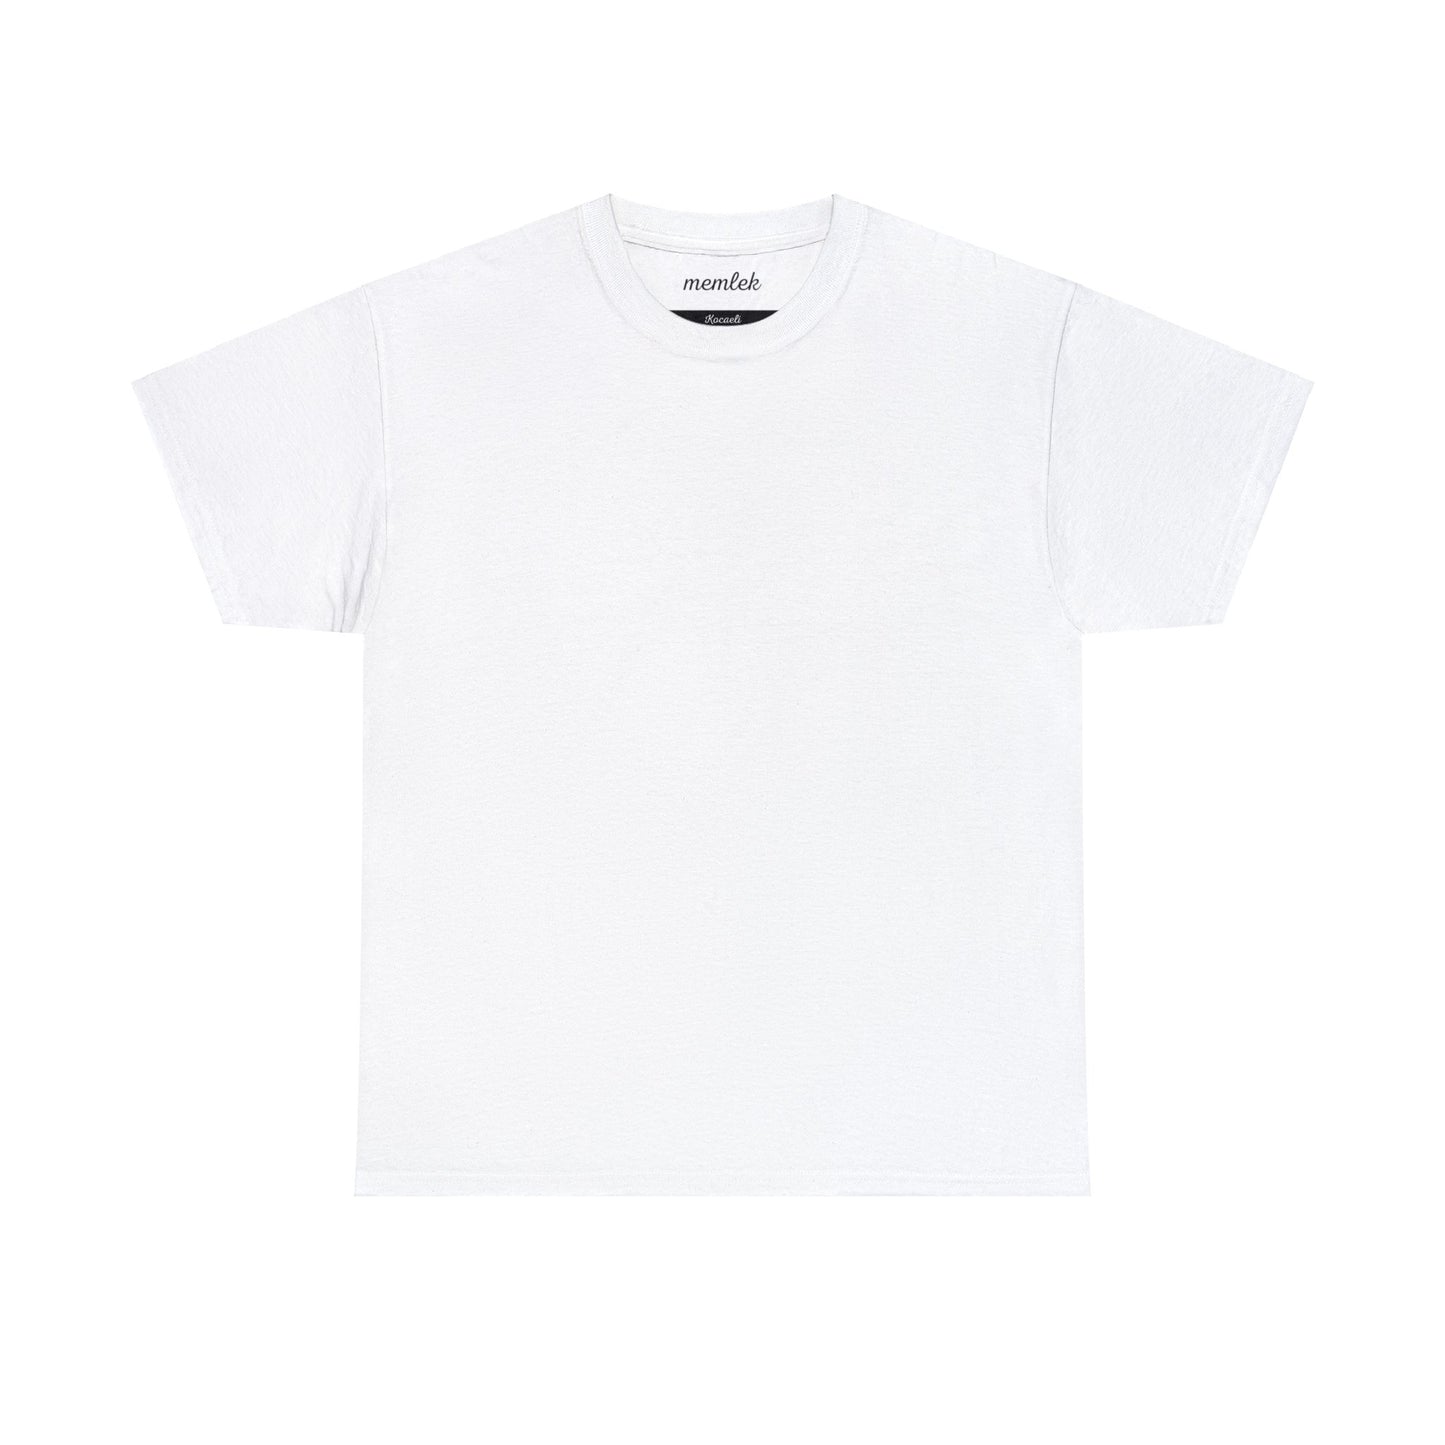 Kurt - 41 Kocaeli - T-Shirt - Back Print - Black/White